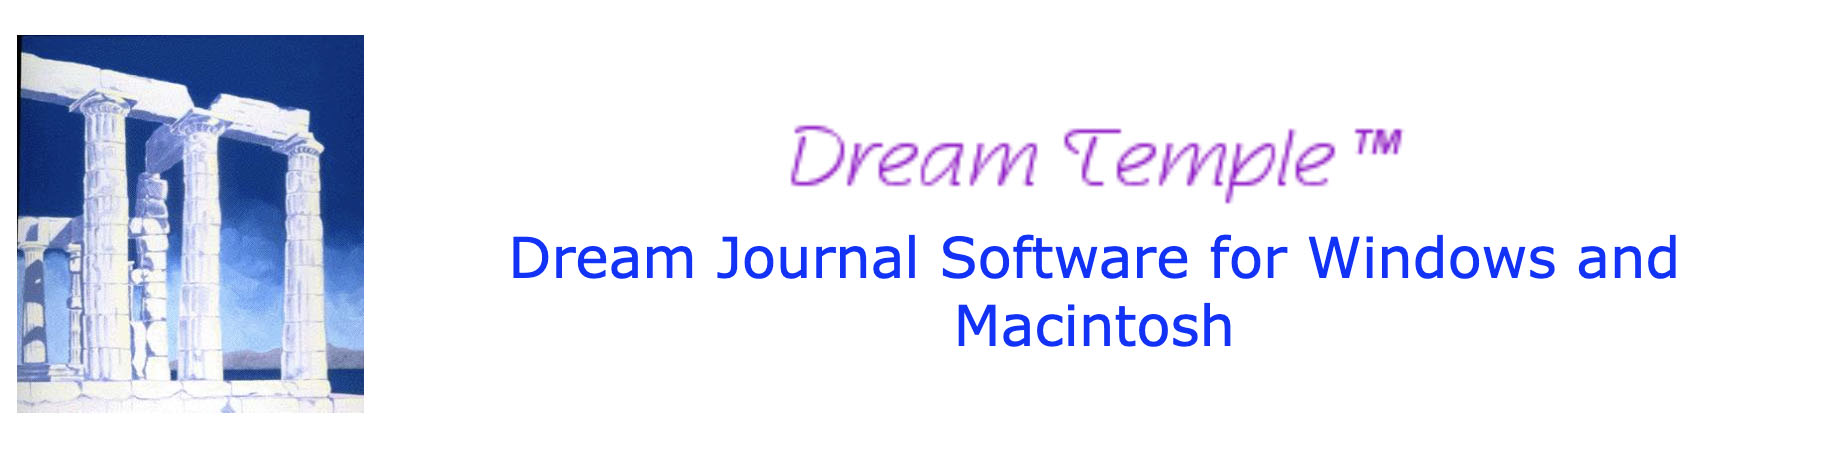 Dream Temple software header